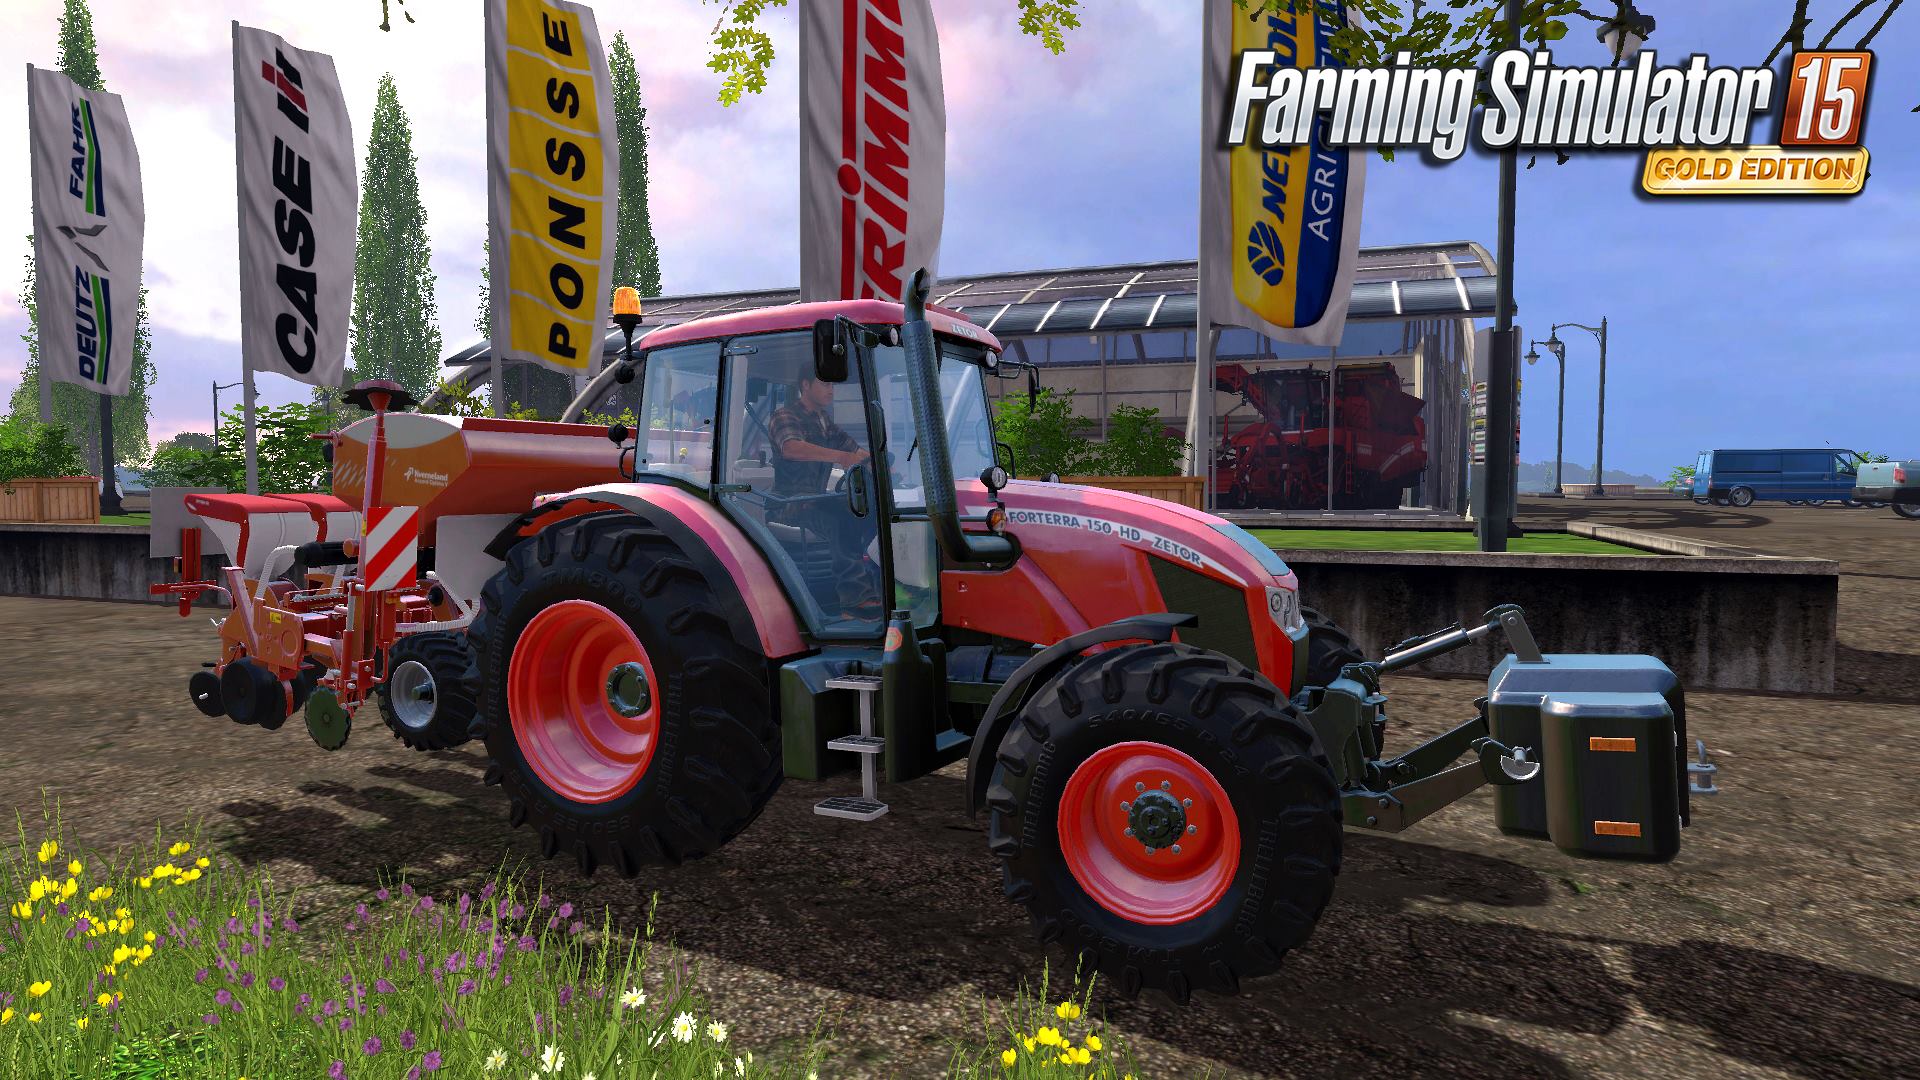 Farming simulator gold. FS 15 Gold Edition. Farming Simulator 15 Gold Edition. FS 13 Gold Edition. Игра ферма 2015 года. Модификации.